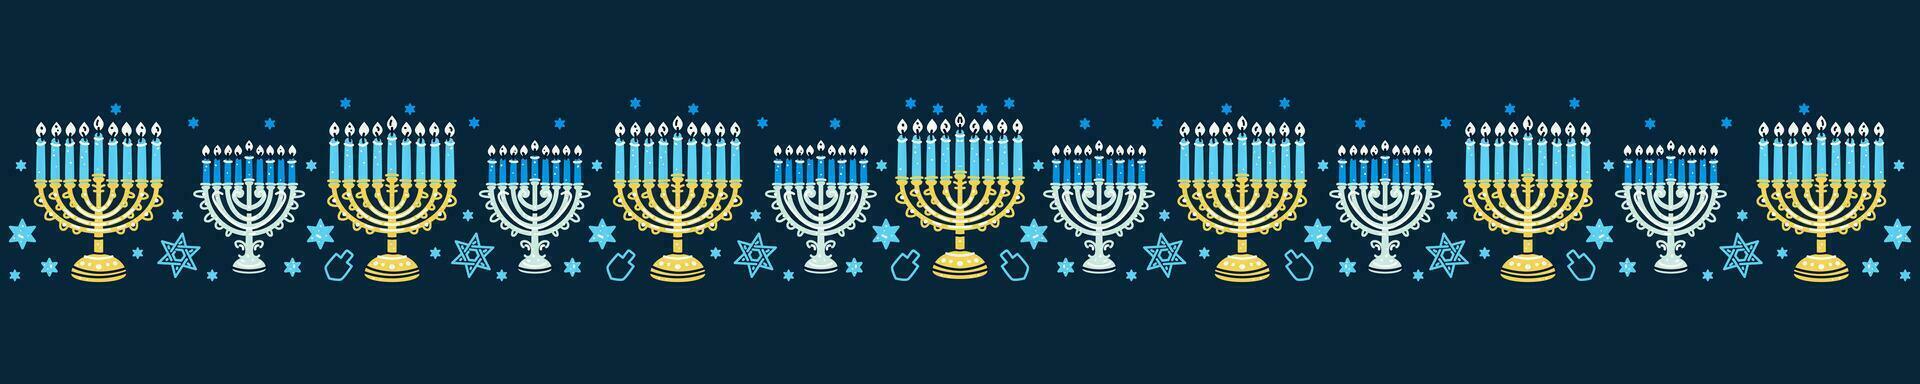 Happy Hanukkah banner. Flat vector illustration with holiday symbols